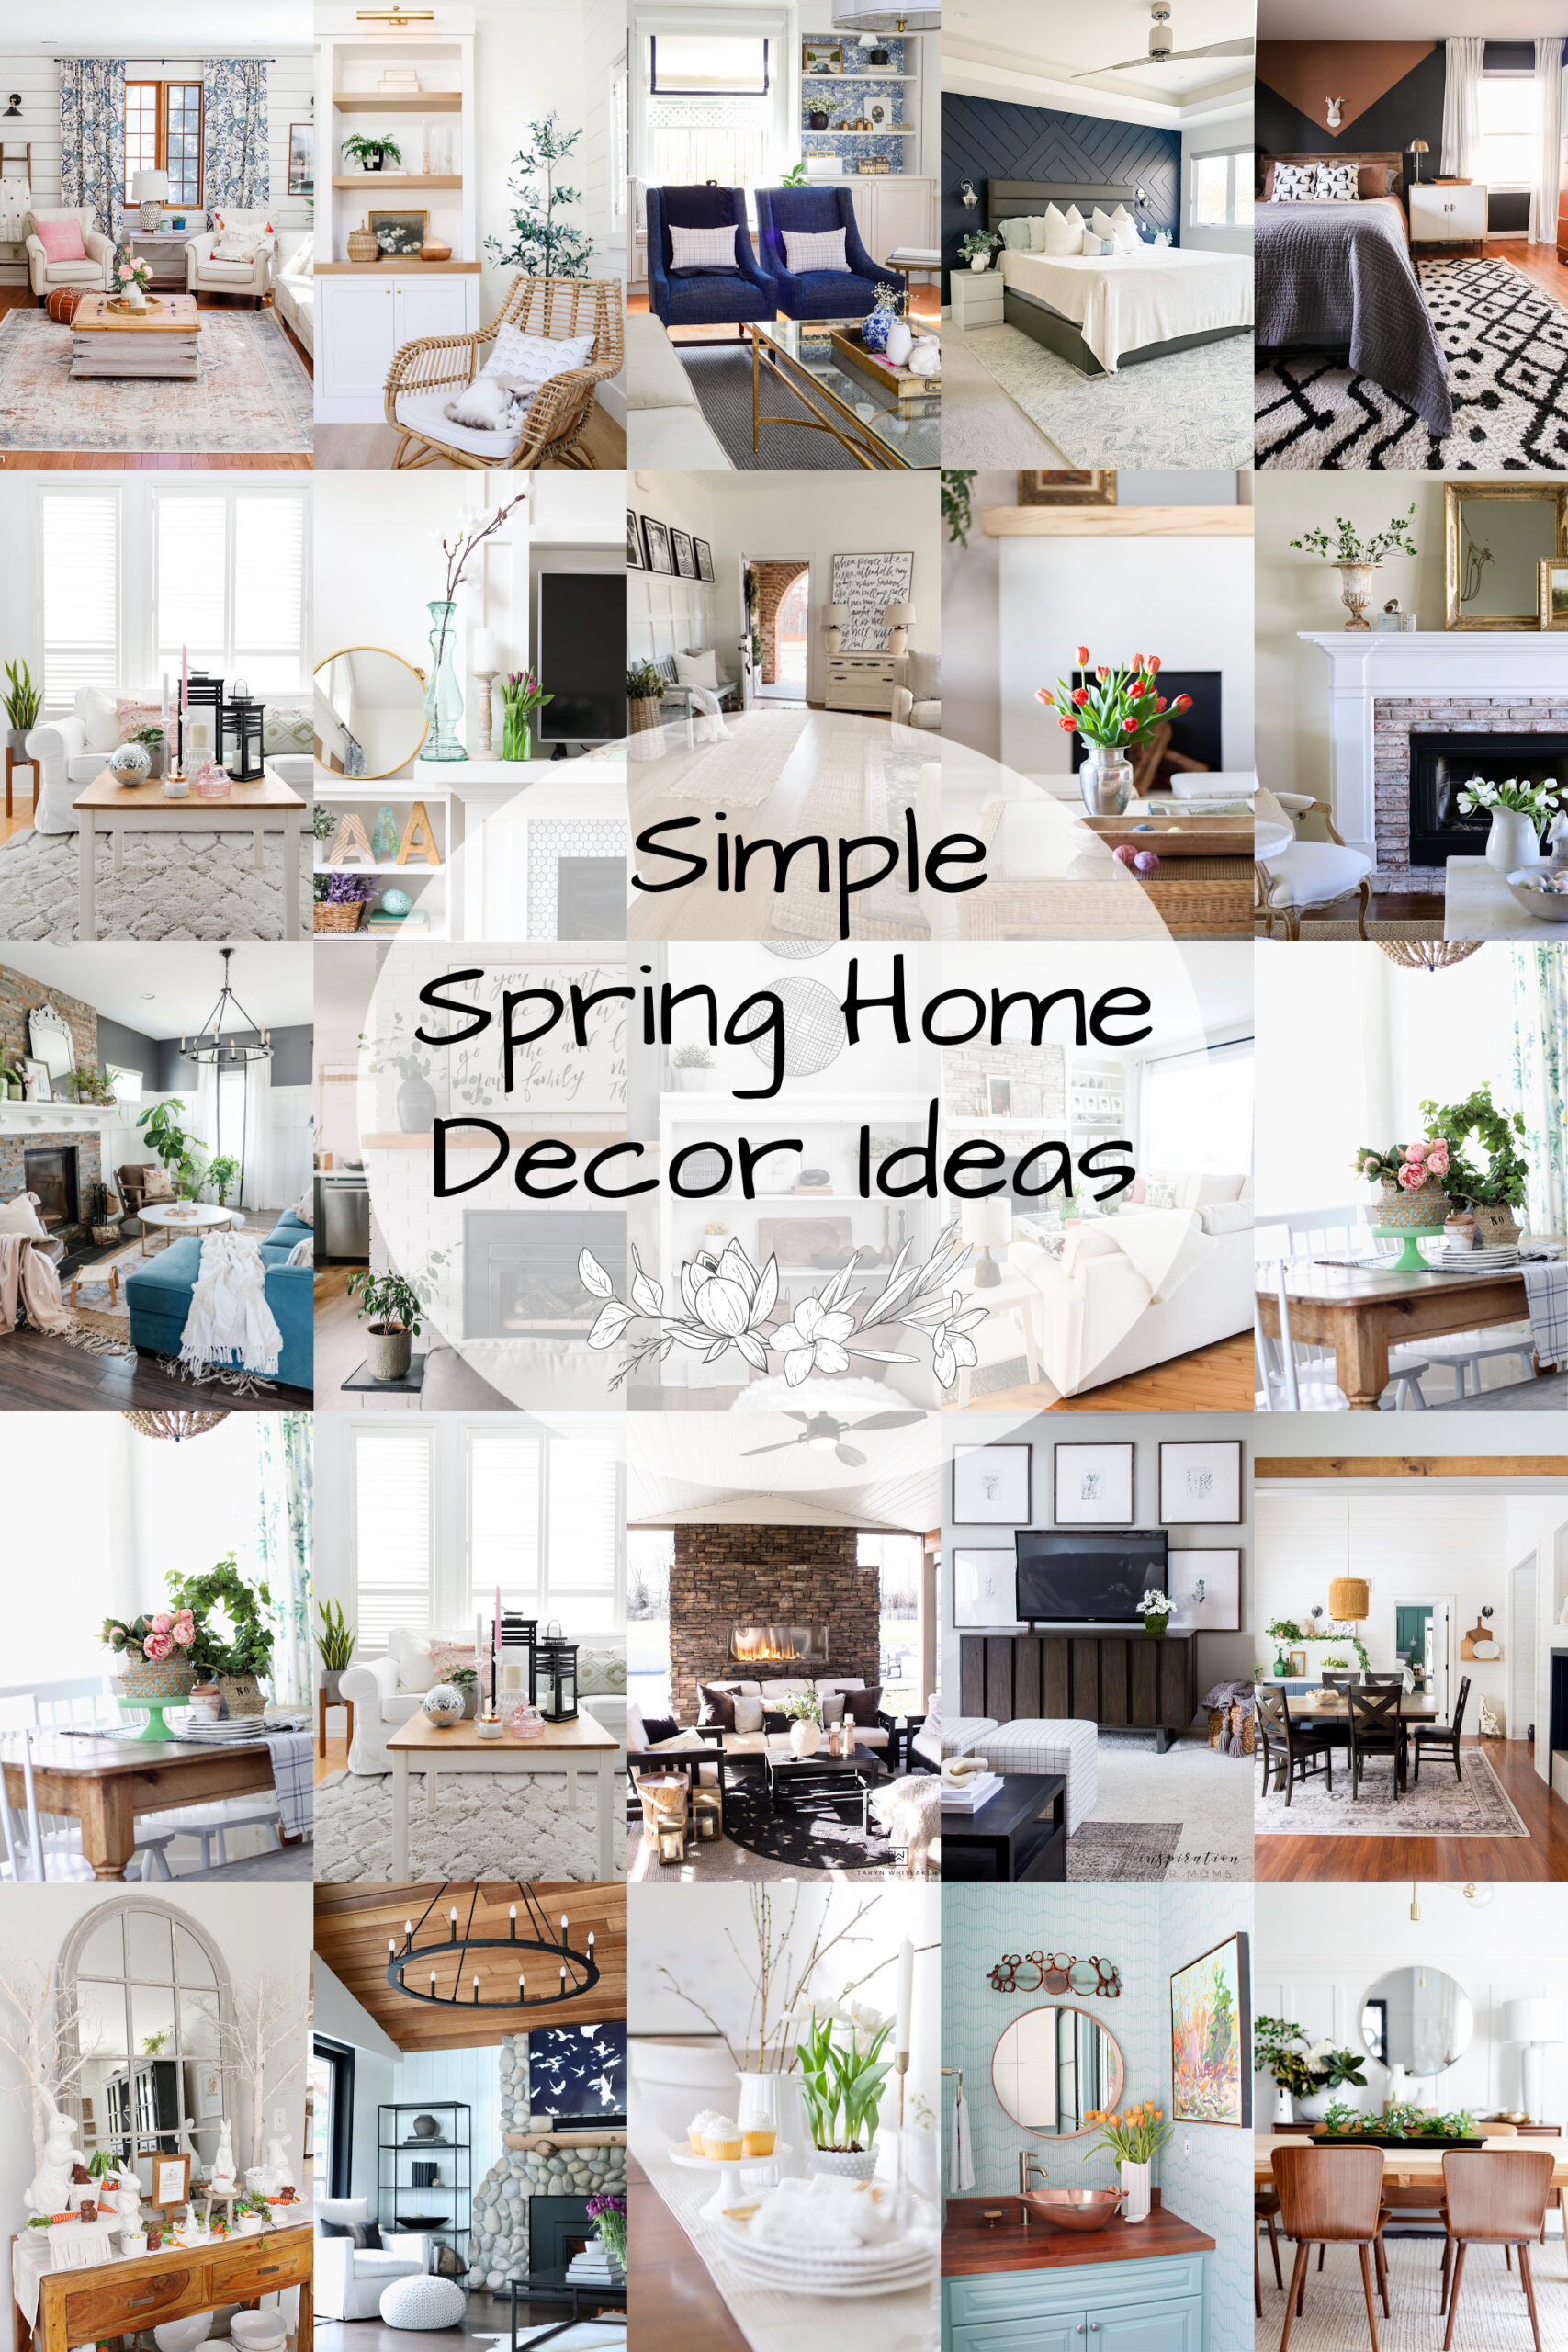 https://www.thehappyhousie.com/wp-content/uploads/2021/03/simple-spring-home-decor-ideas-Seasonal-Simplicity-Tours-copy-scaled.jpg